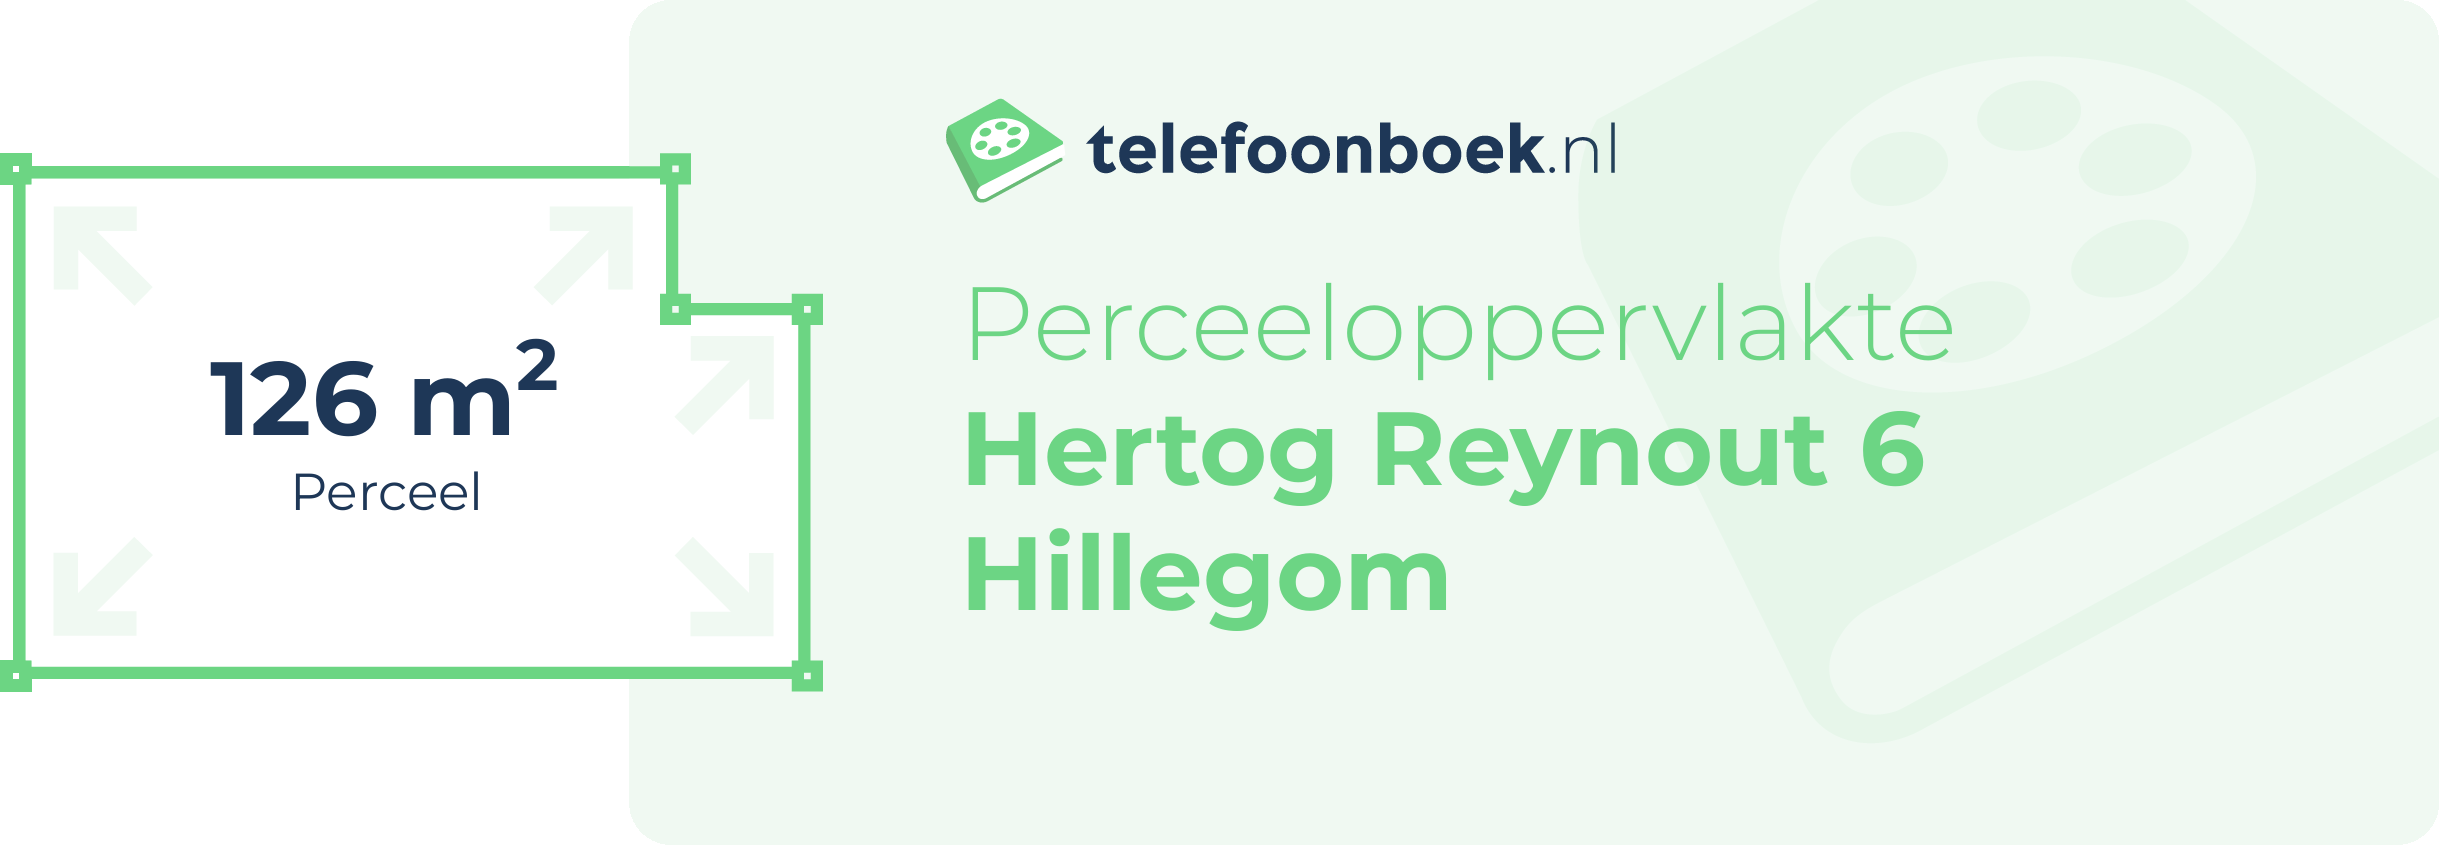 Perceeloppervlakte Hertog Reynout 6 Hillegom